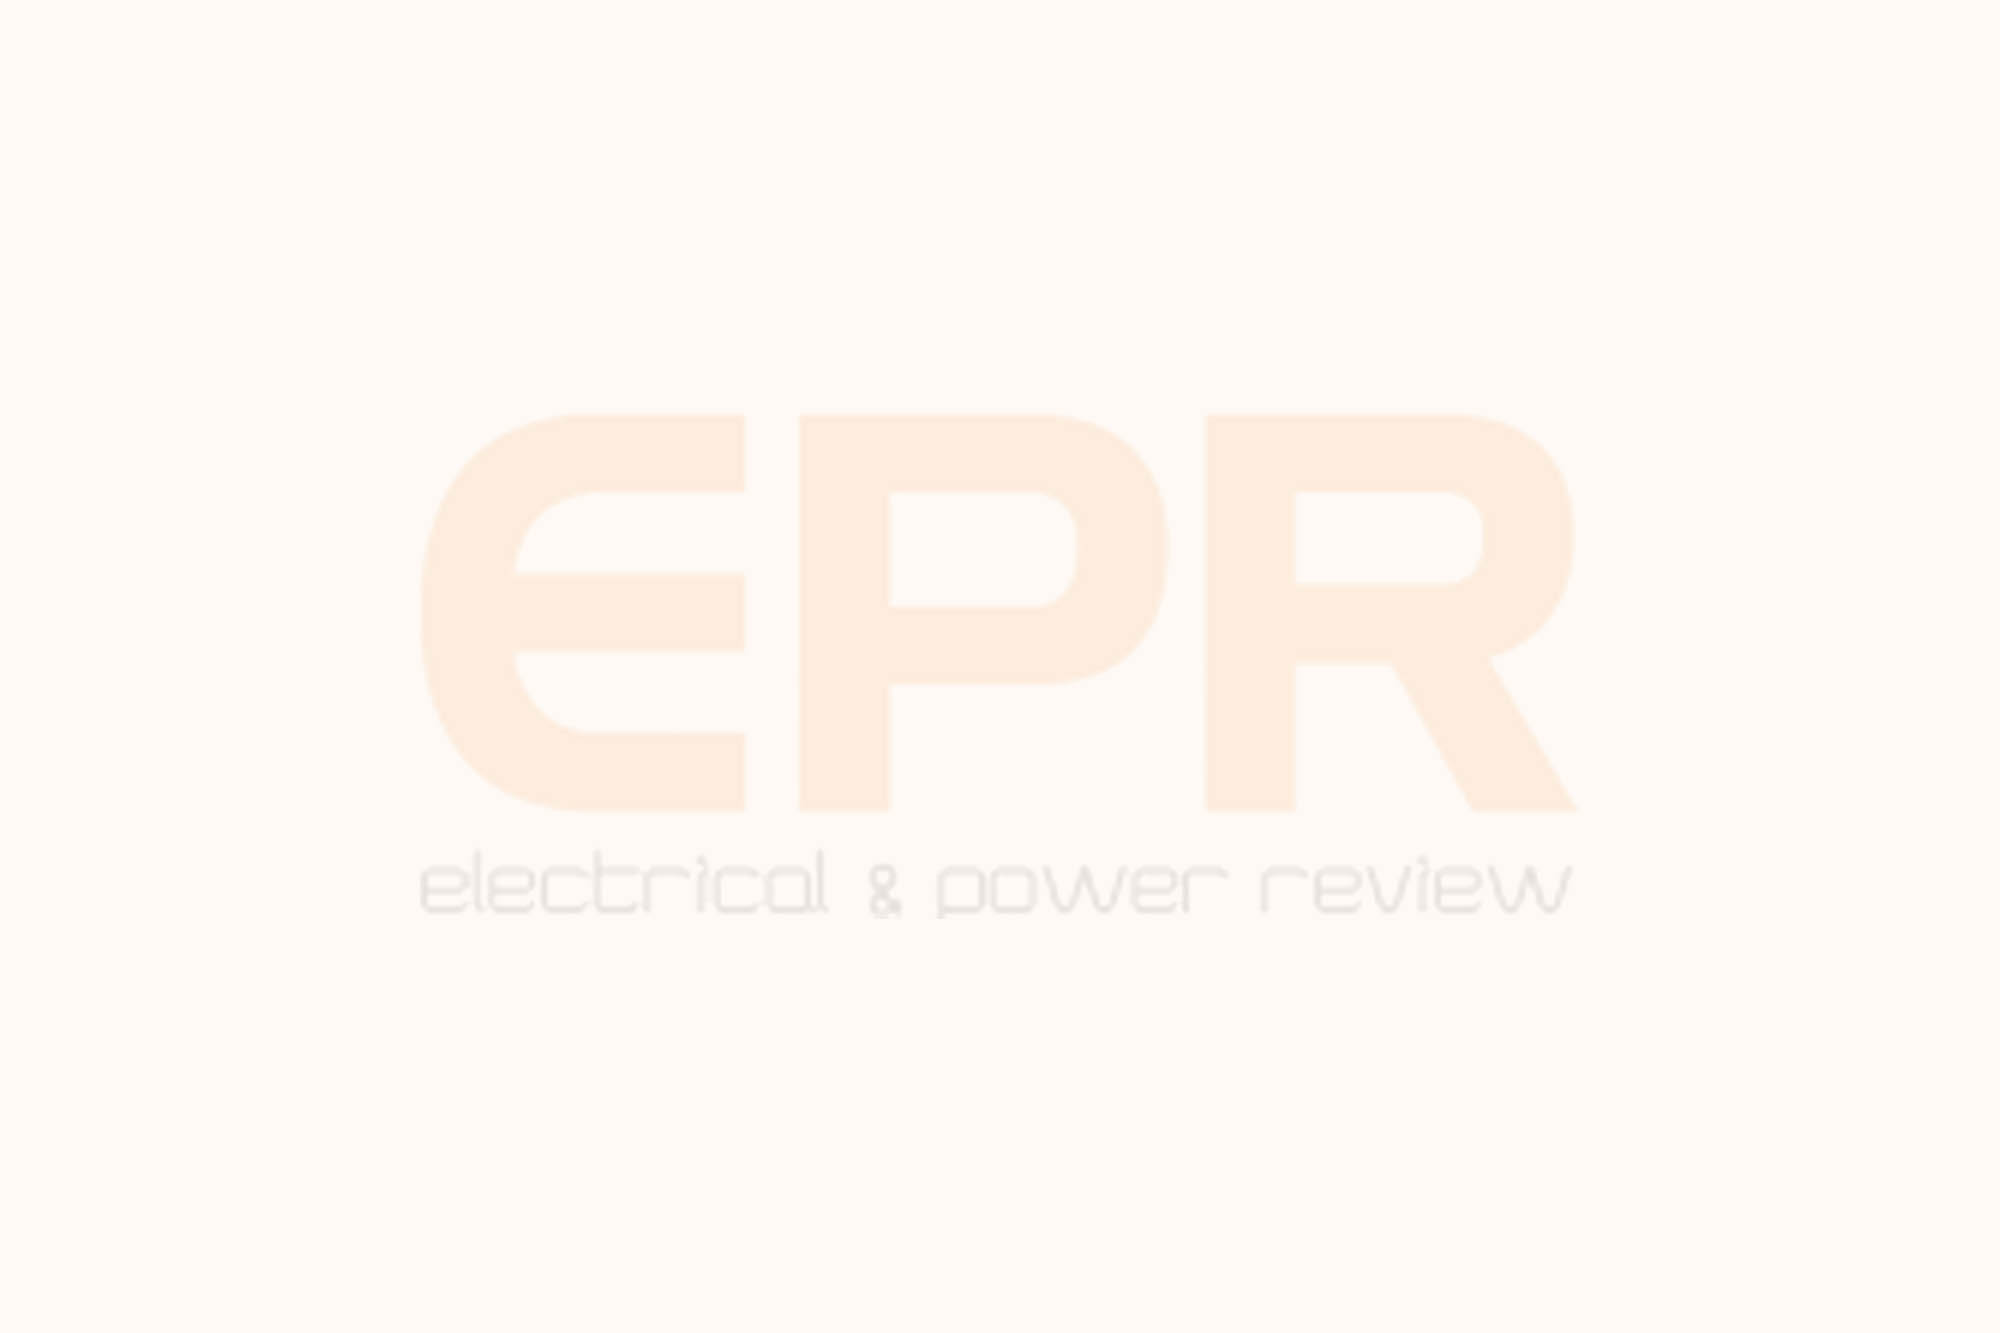 EPR (Electrical & Power Review) | EPR Magazine